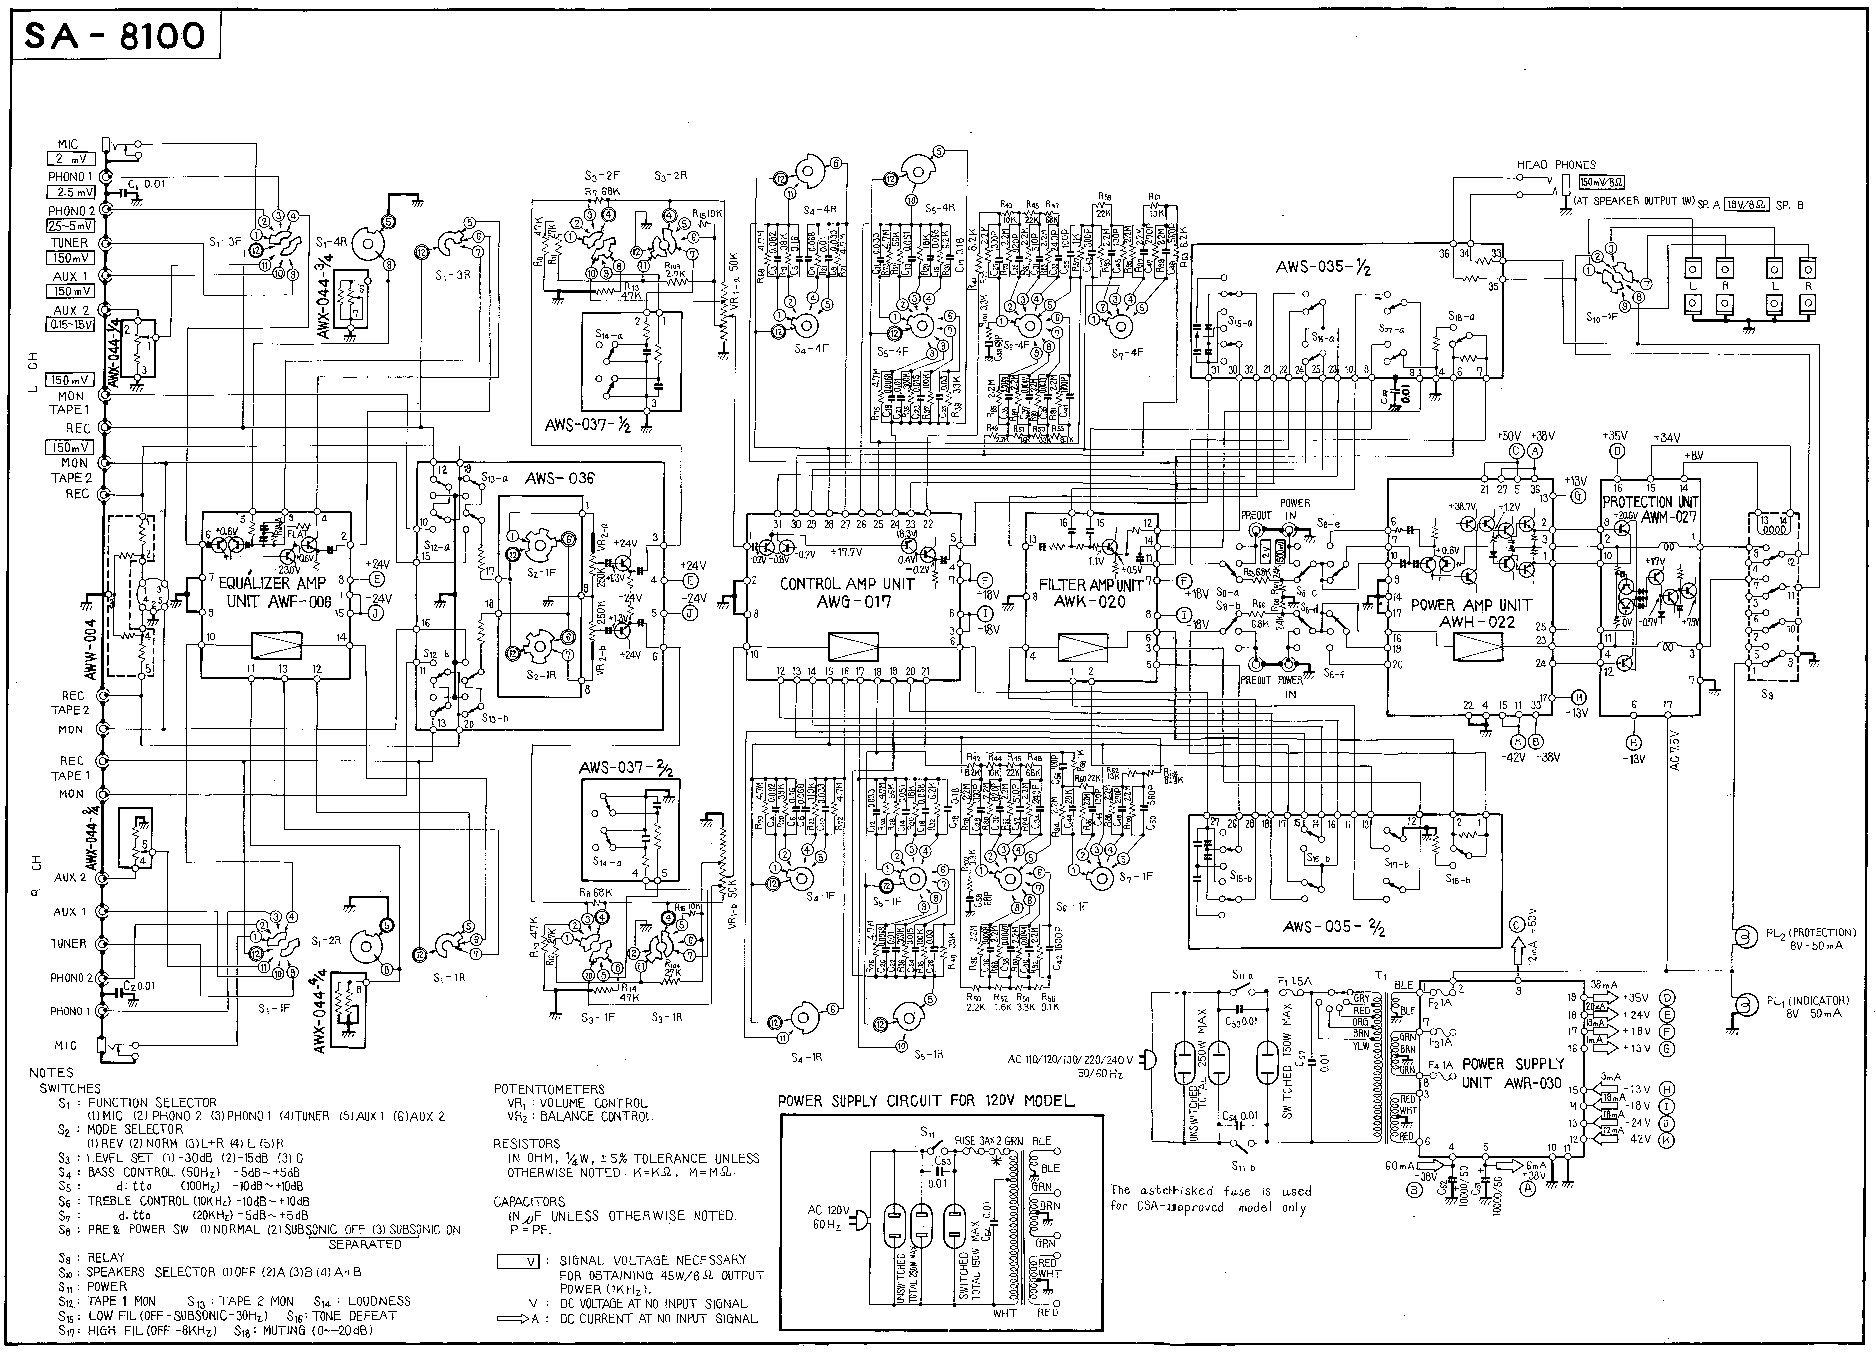 Car Power Amplifier Circuit Diagram Circuit Diagram for Amplifier Wiring Diagram Ponents Of Car Power Amplifier Circuit Diagram